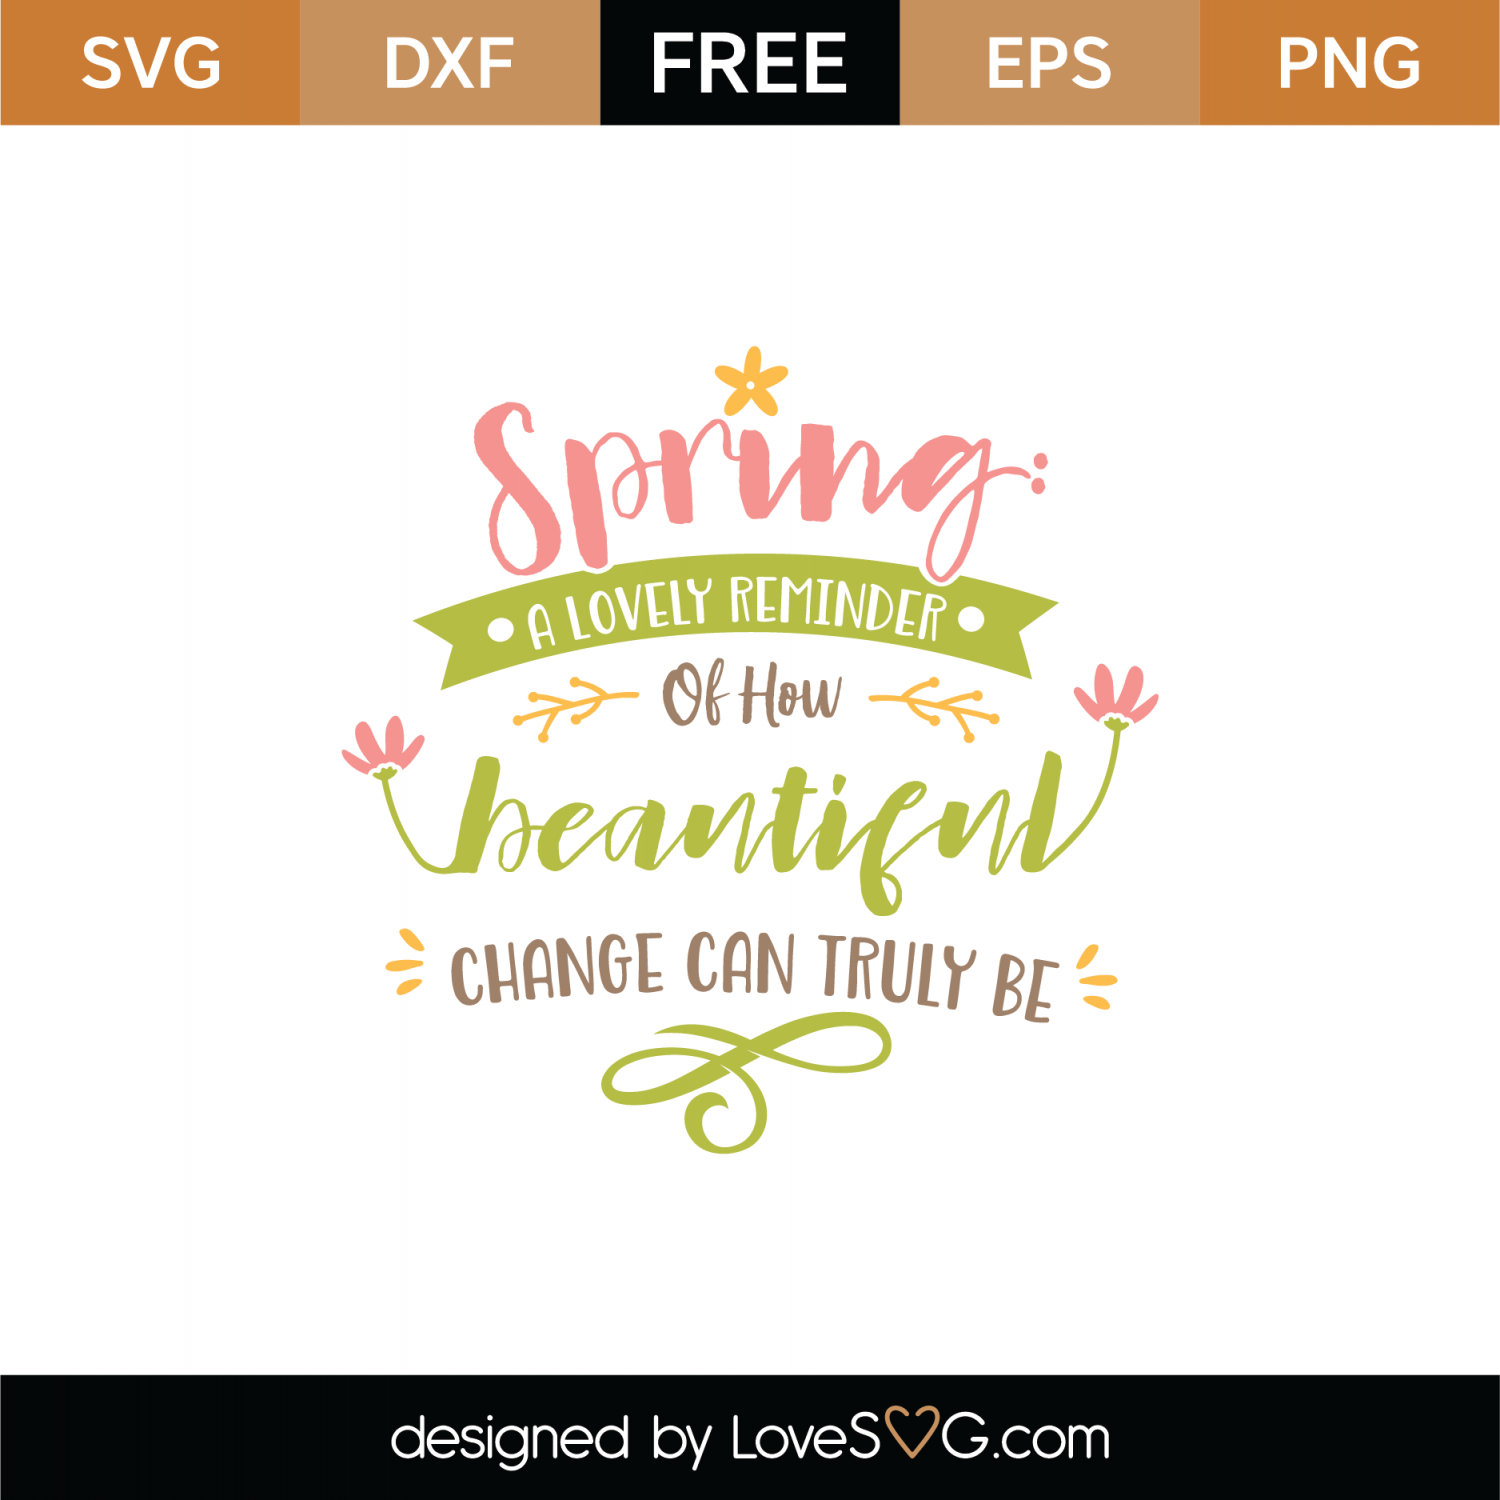 Download Free Spring A Beautiful Reminder SVG Cut File | Lovesvg.com